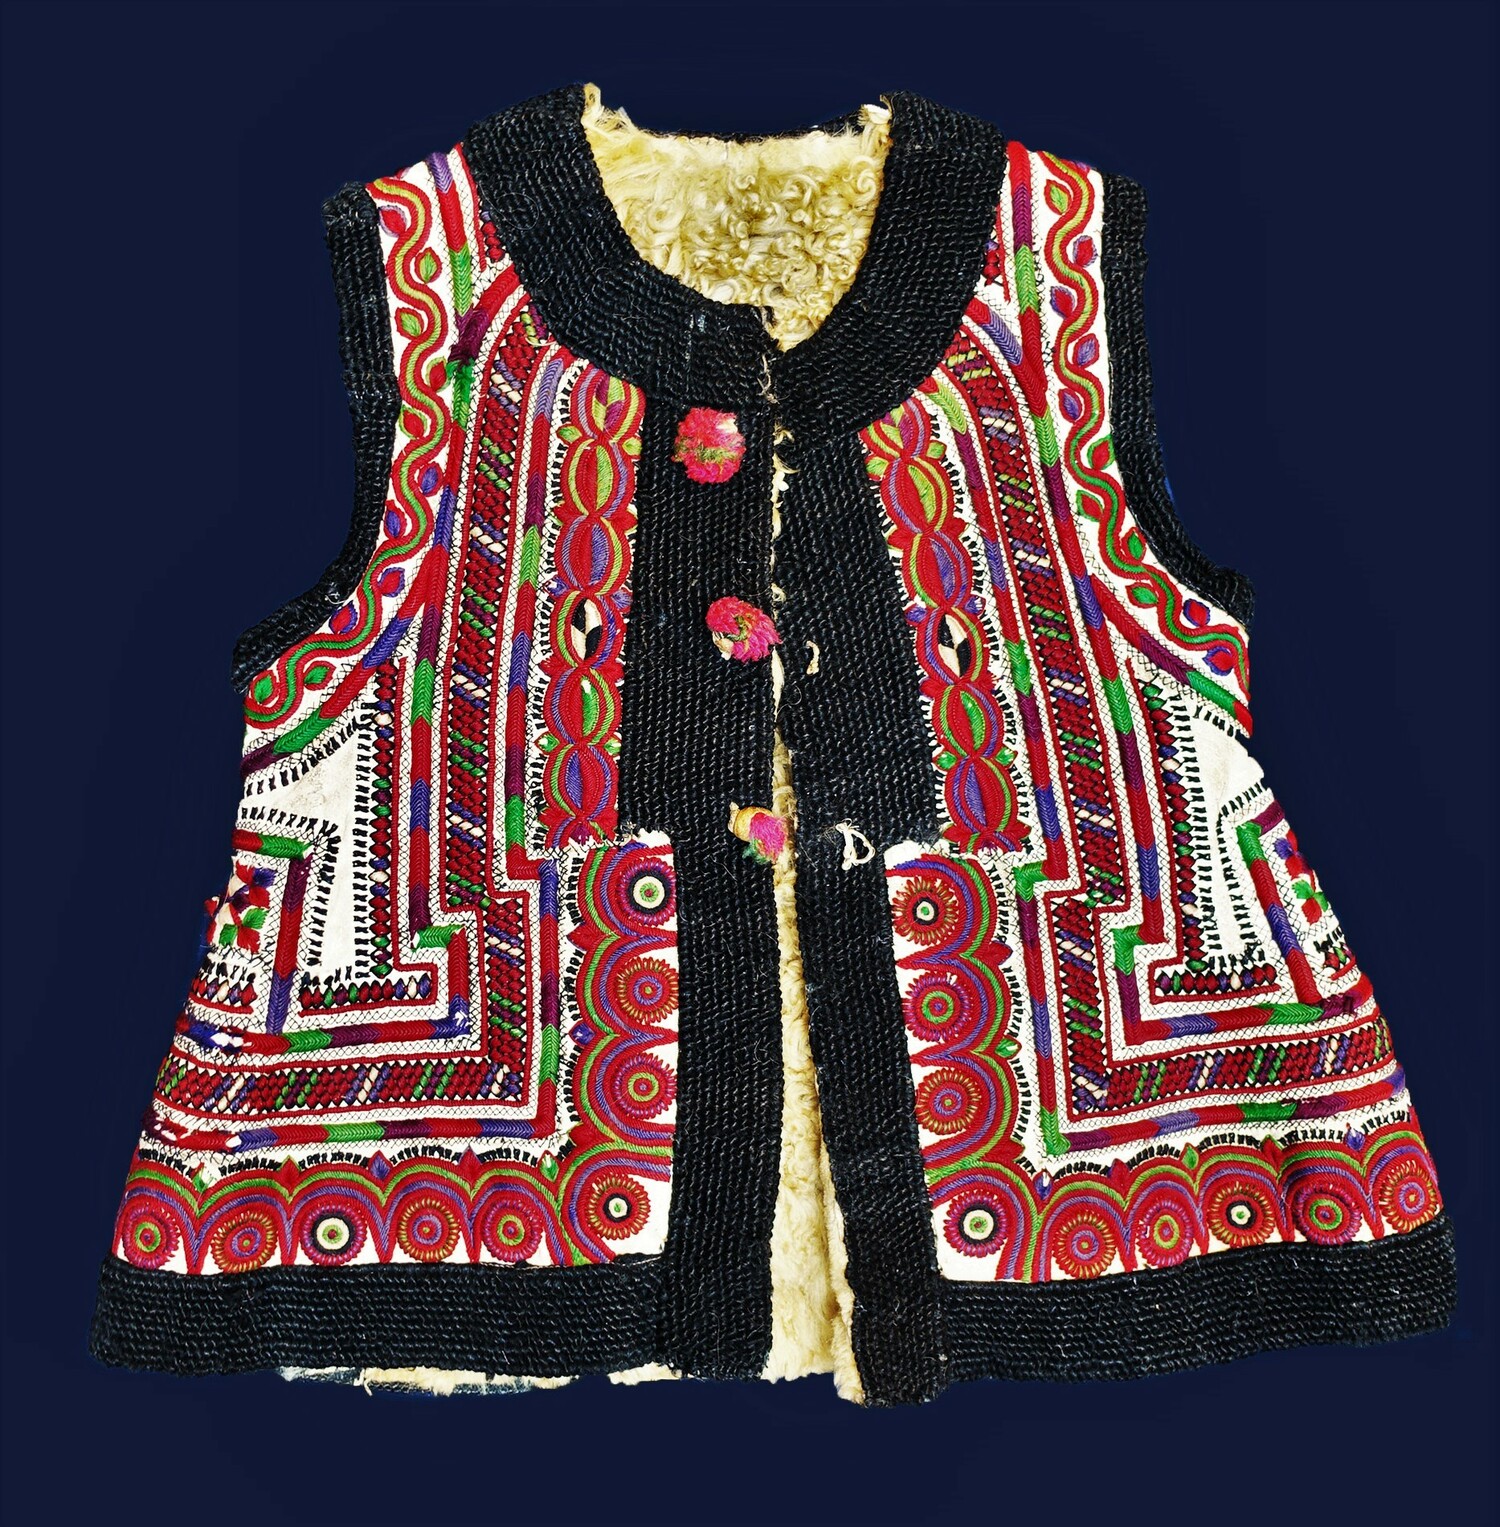 Romanian/Ukrainian waistcoat with white sheep's fleece lining, edged with black looped embroidery. 20th century (TRC 2022.0390).